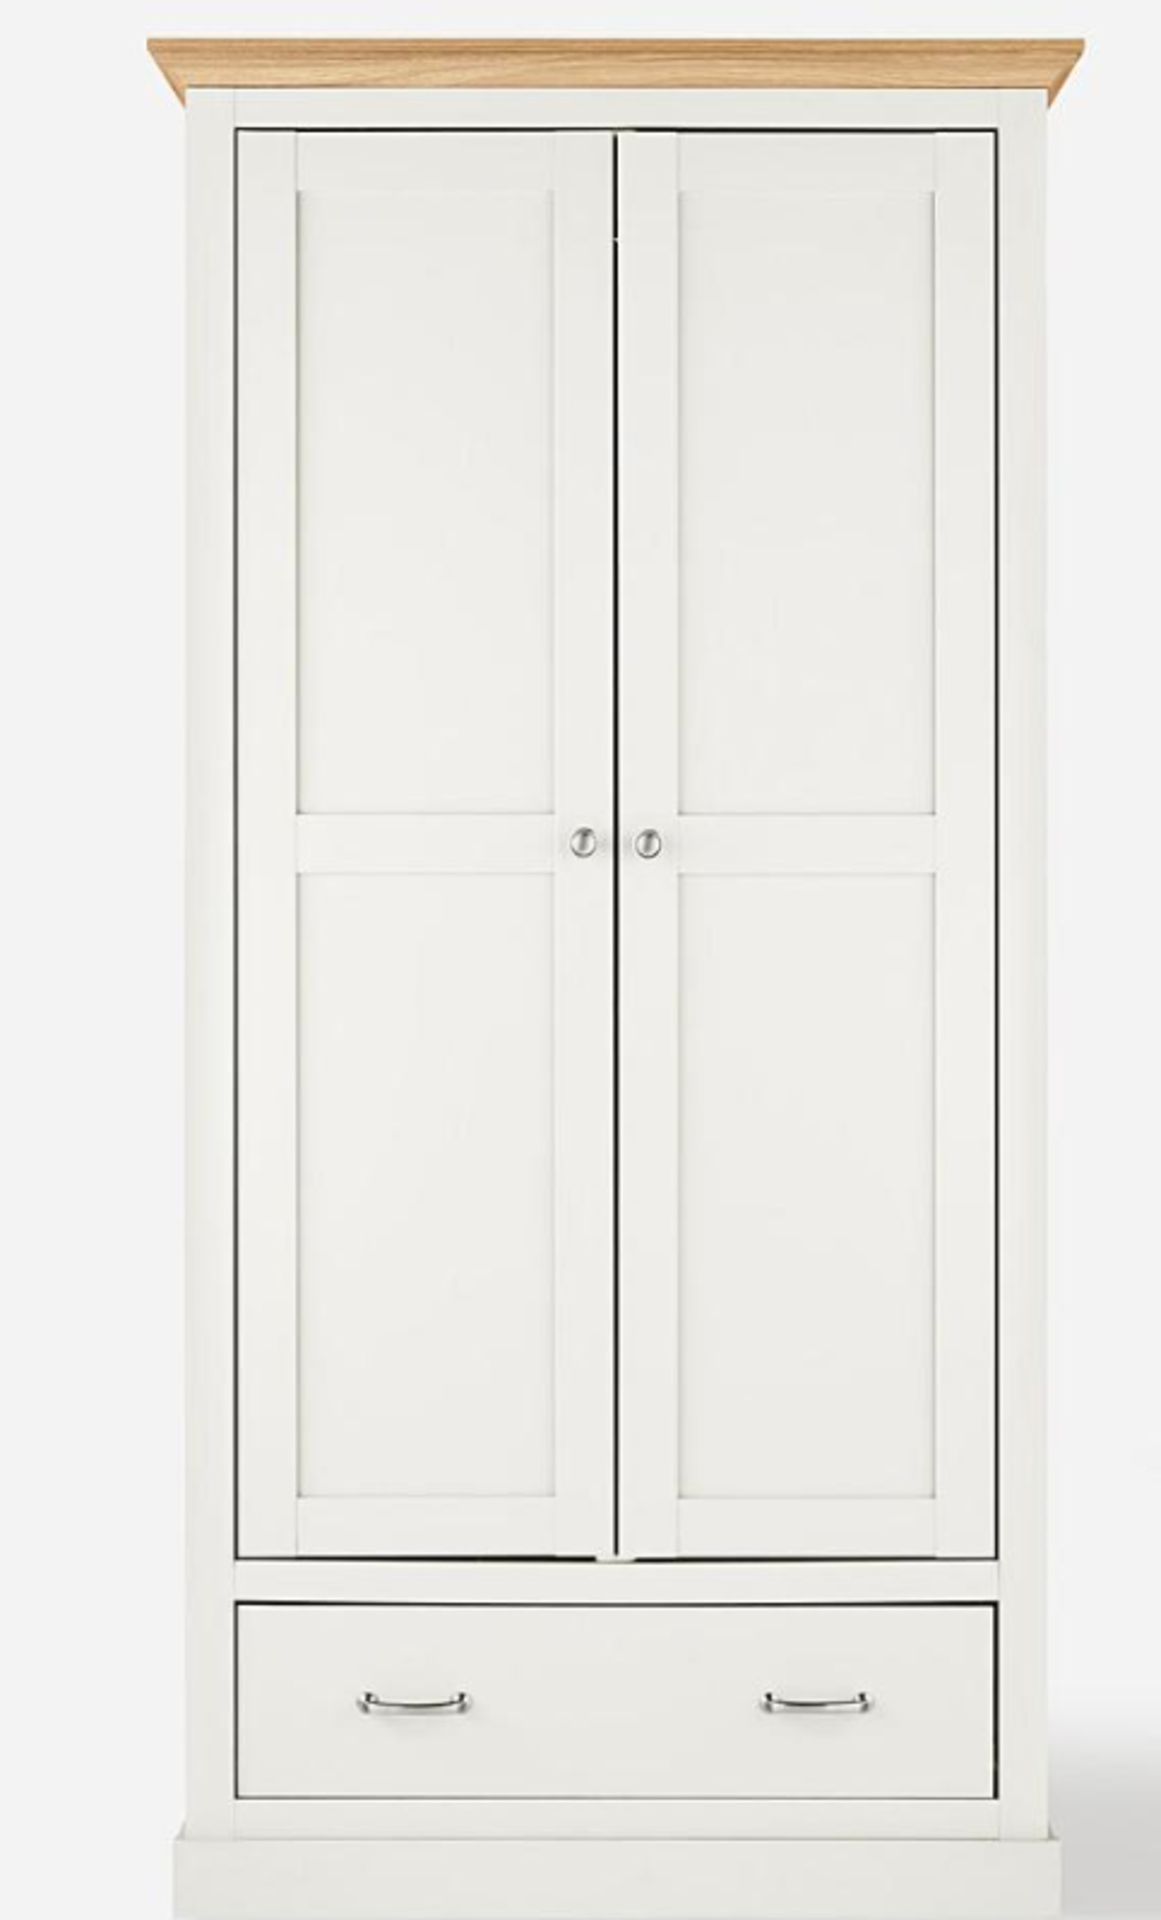 Julipa Ashford 2 Door 1 Drawer Wardrobe. - ER20. RRP £519.00. Part of the Julipa Brand. Bring an